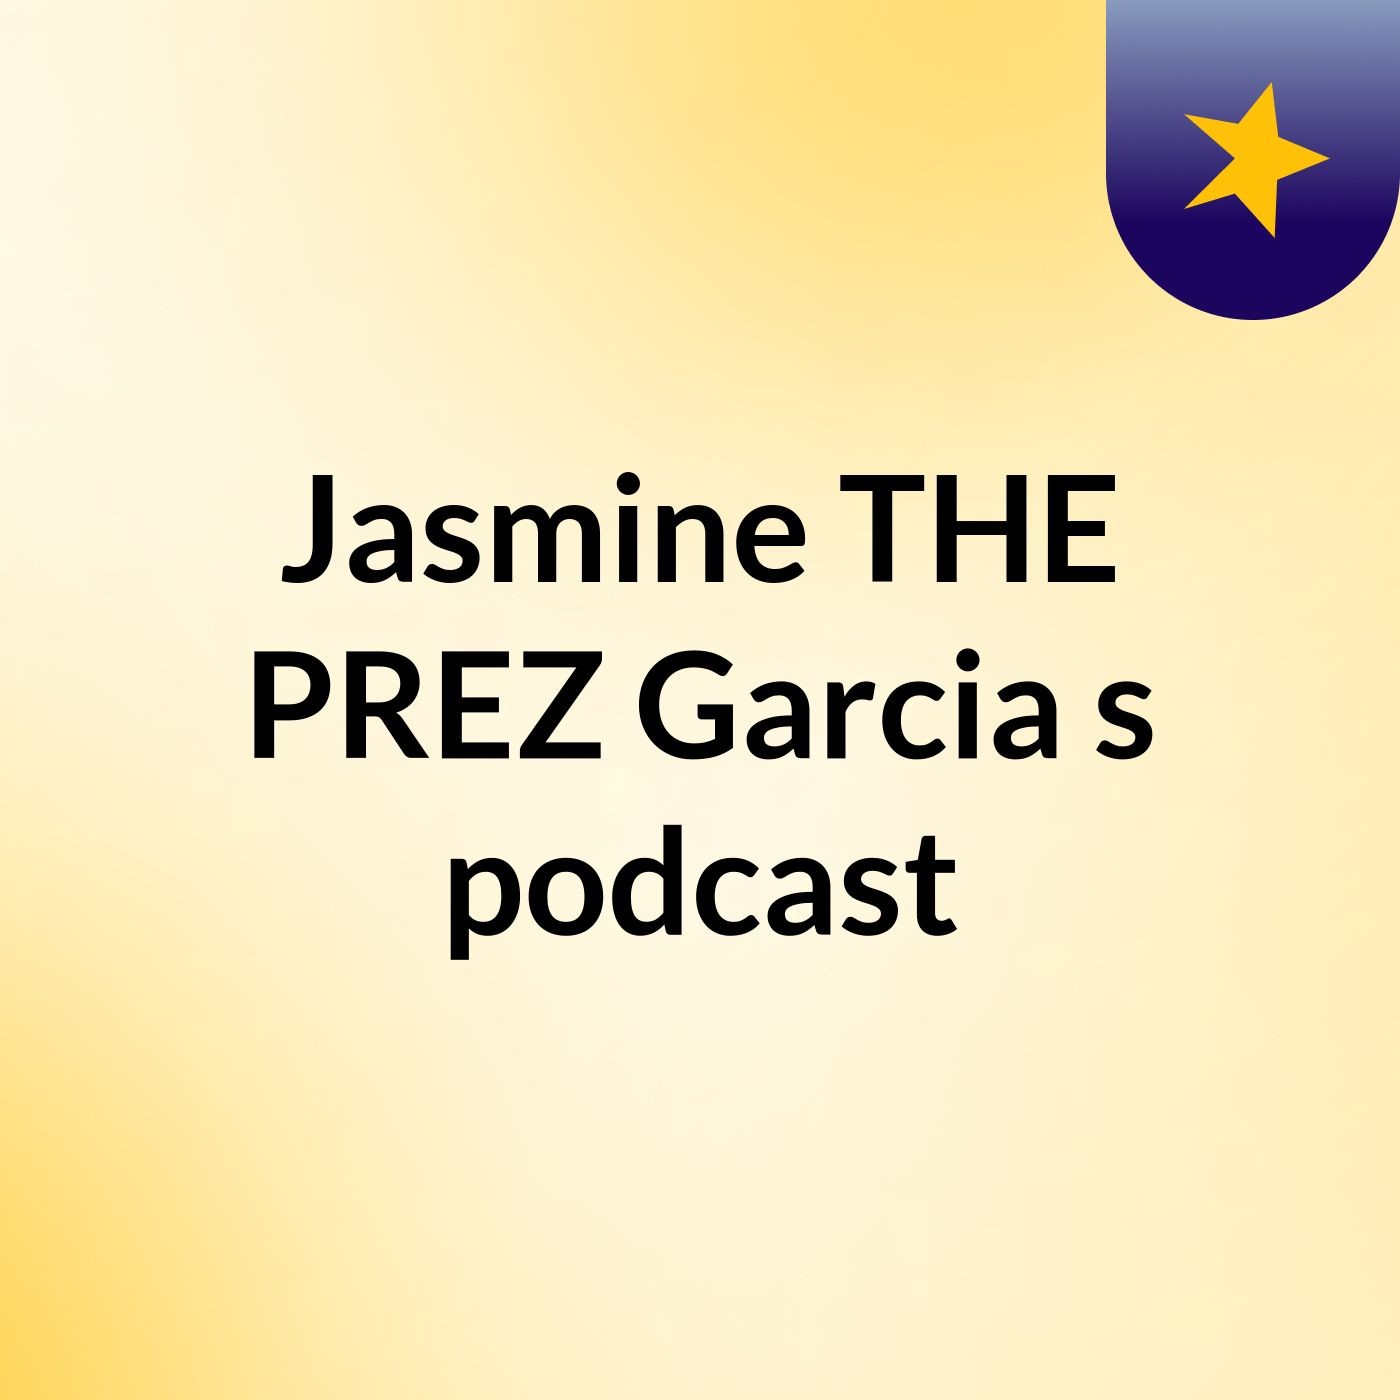 Episode 5 - Jasmine THE PREZ Garcia's podcast